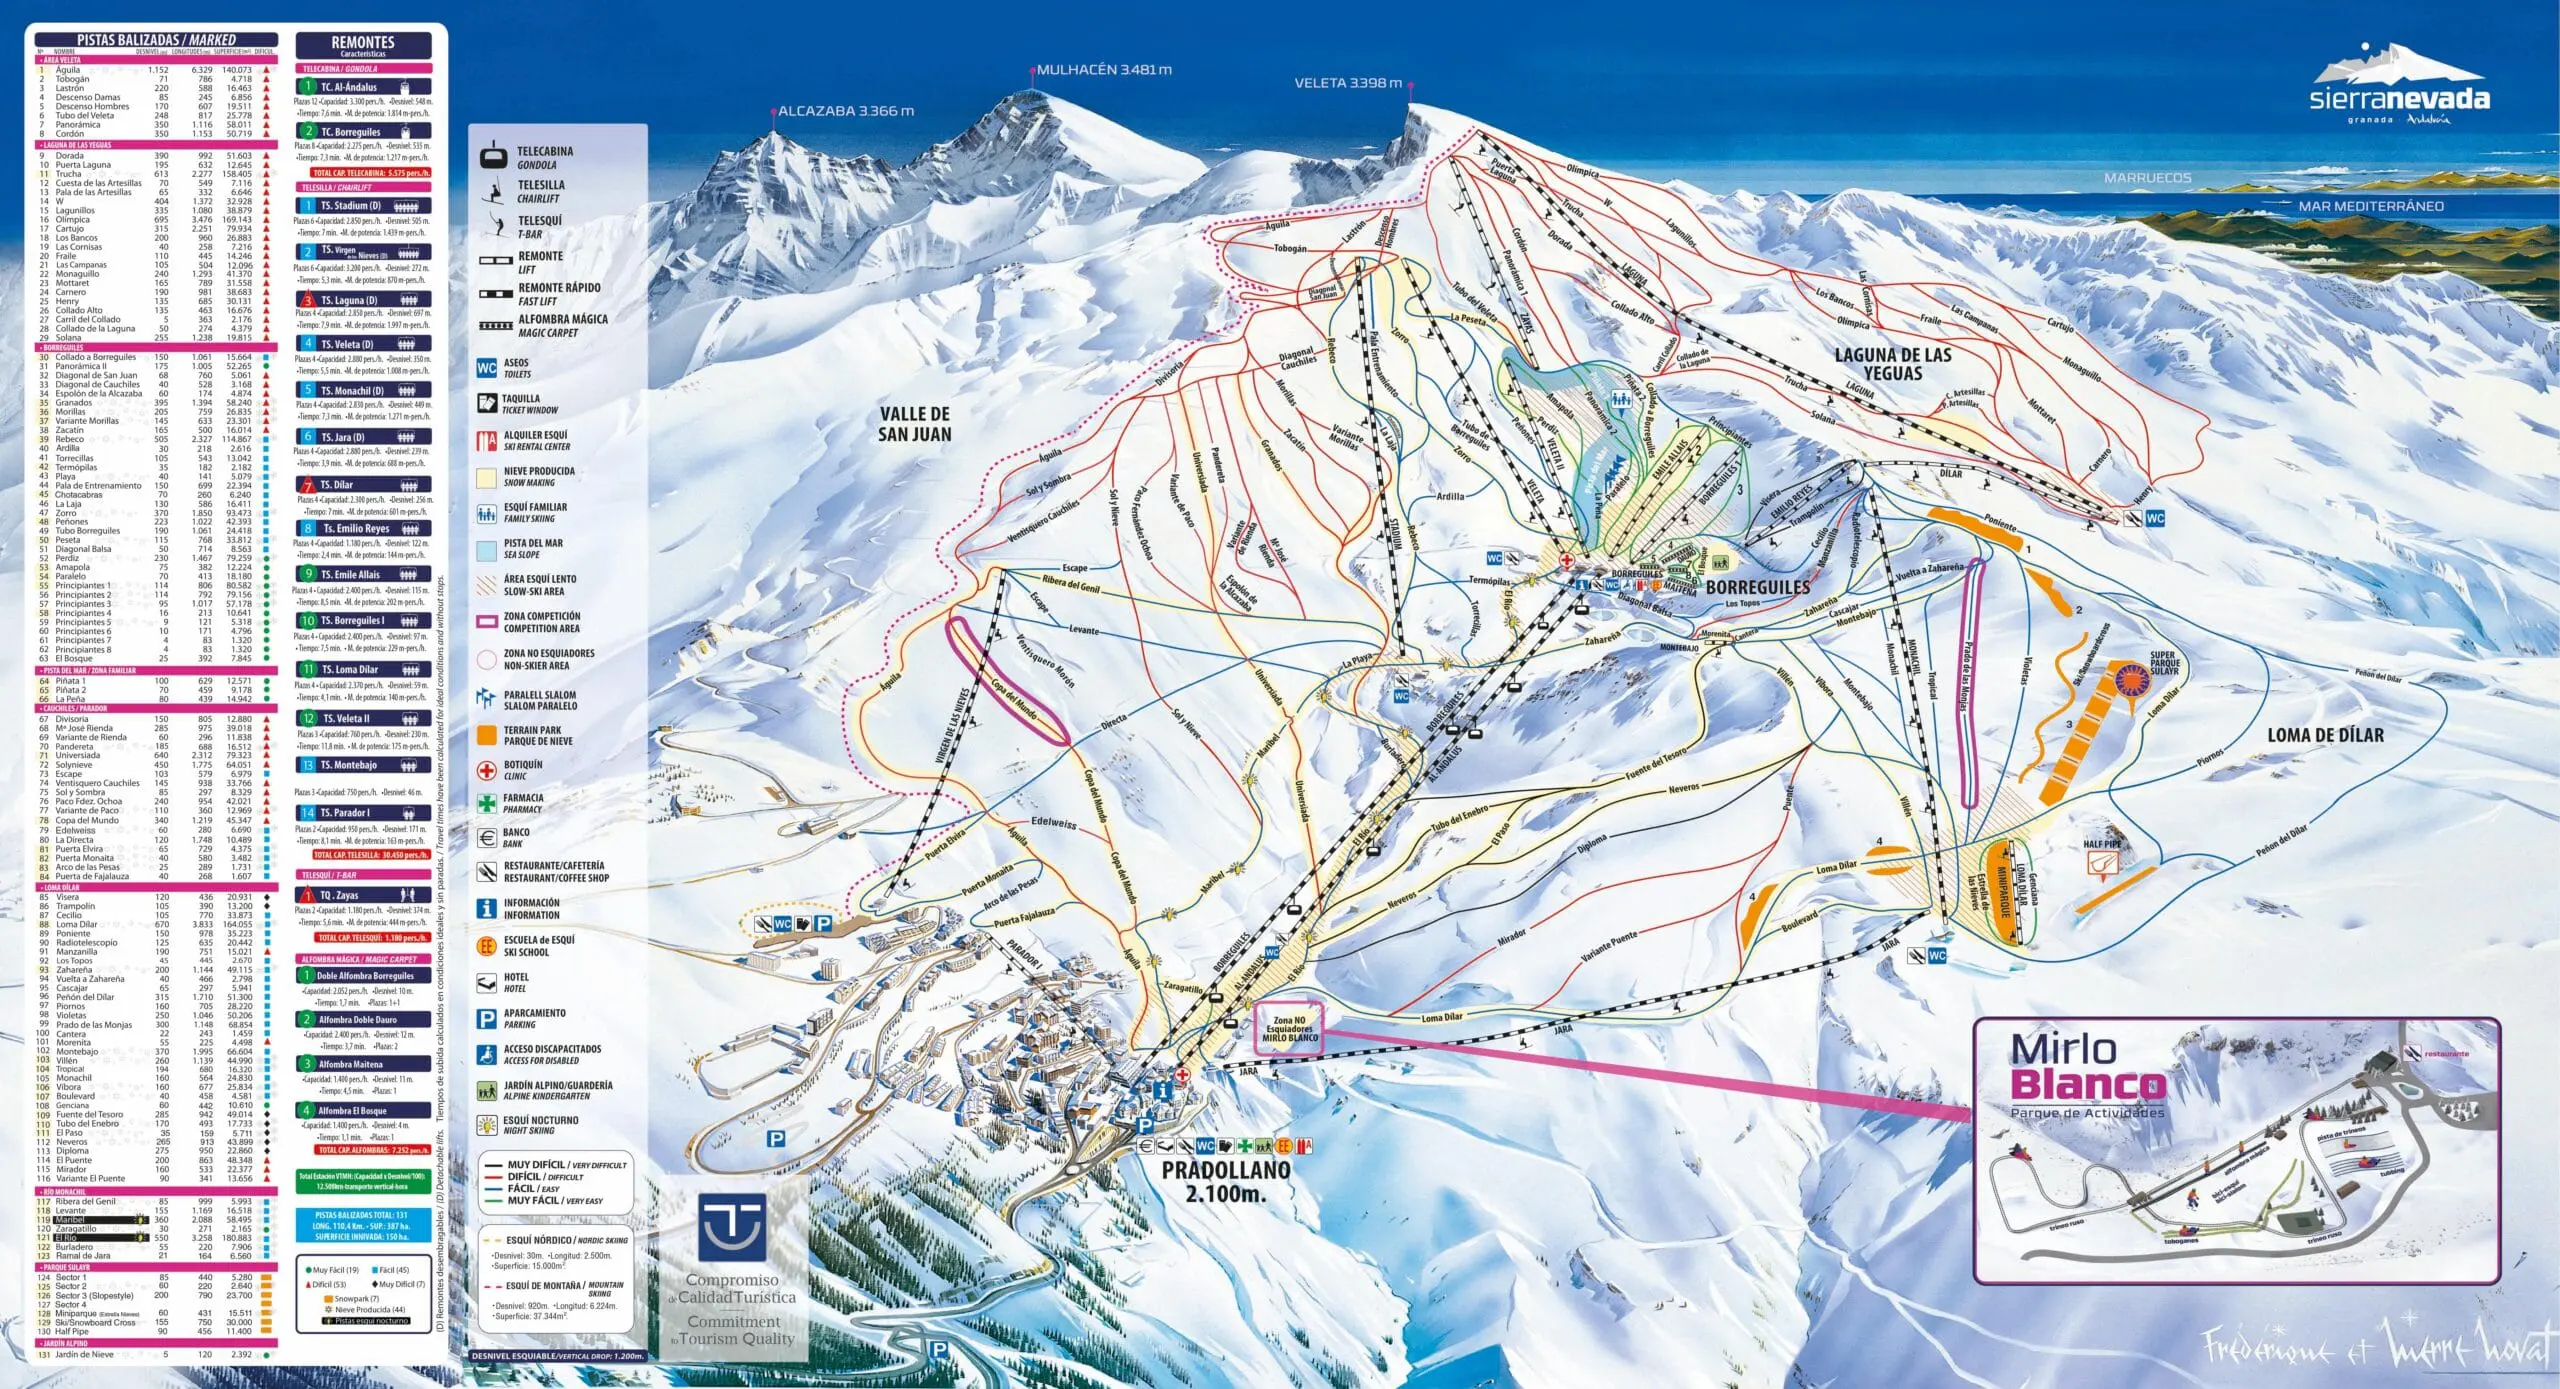 Sierra Nevada Ski pistekort scaled